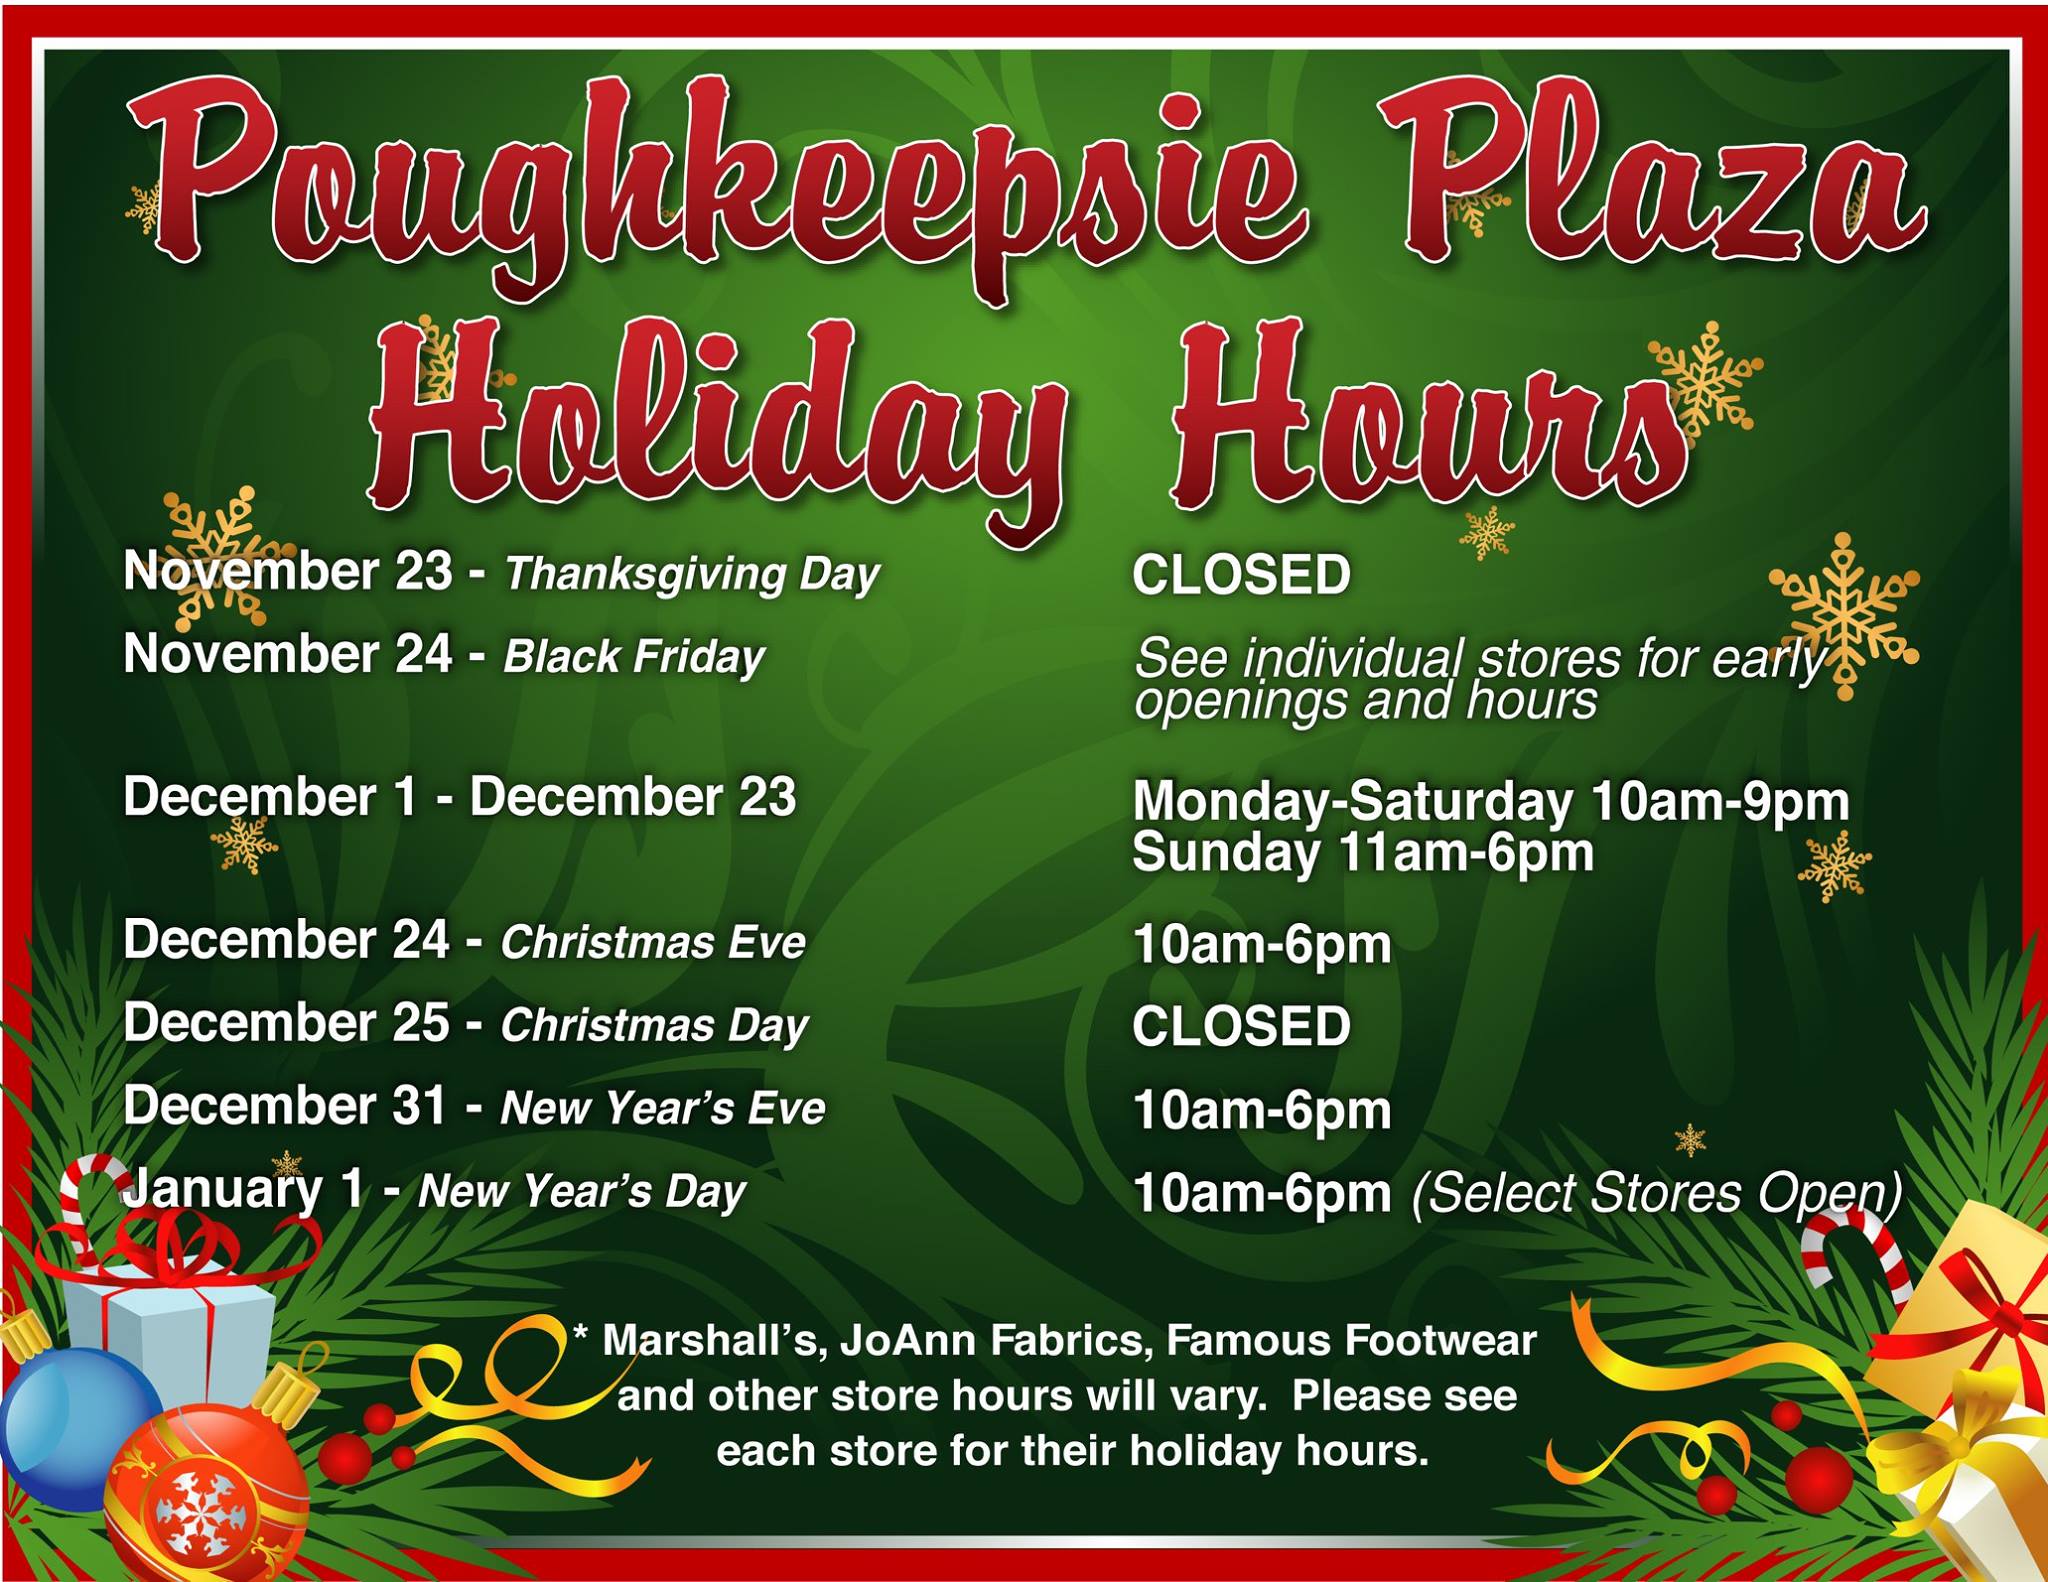 Holiday Hours! Poughkeepsie Plaza